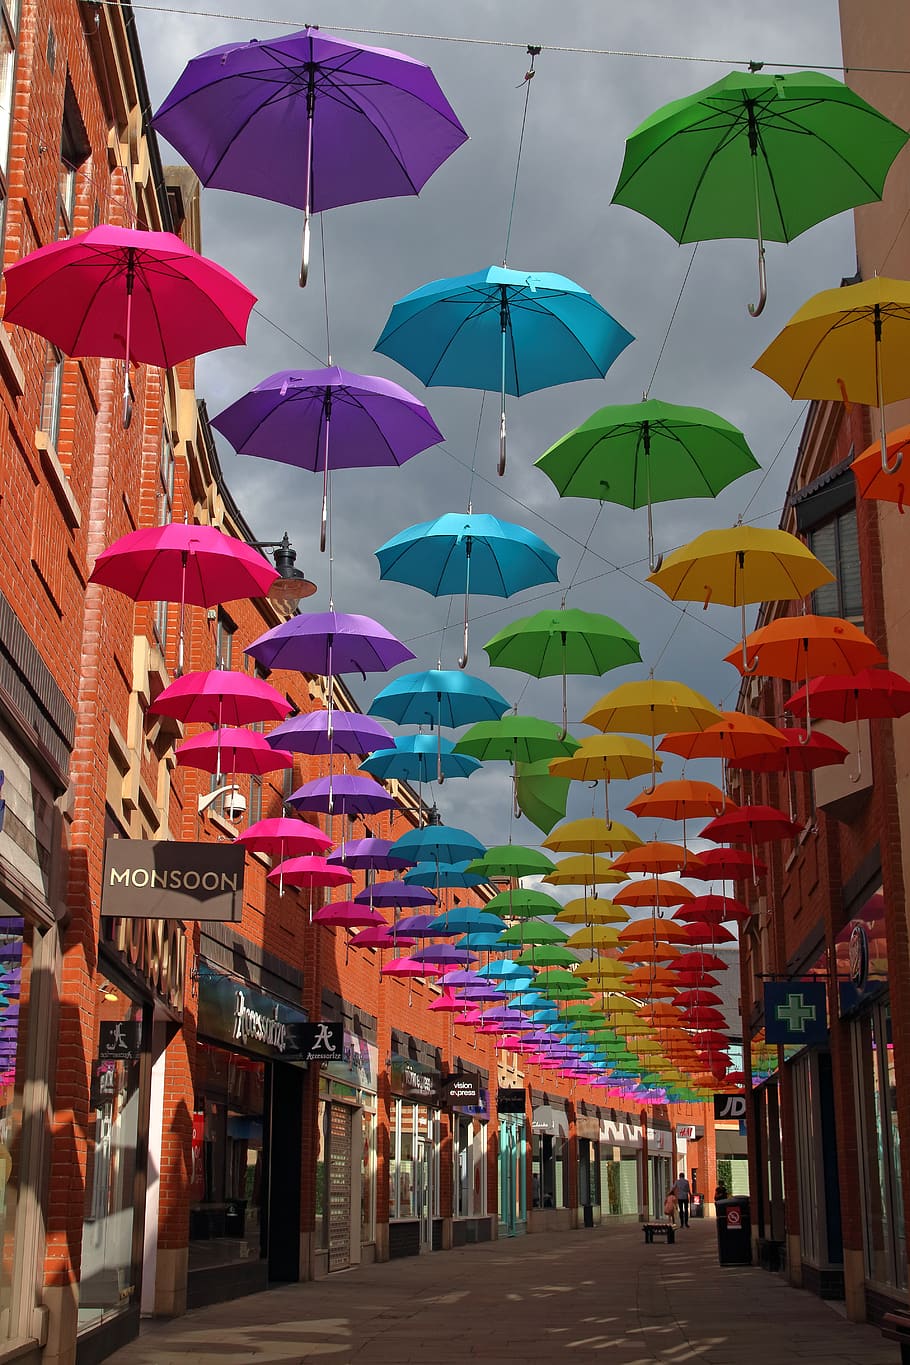 durham, modern art, umbrellas, city, prince bishop's shopping centre, england, pride, rainbow, installation, commercialism